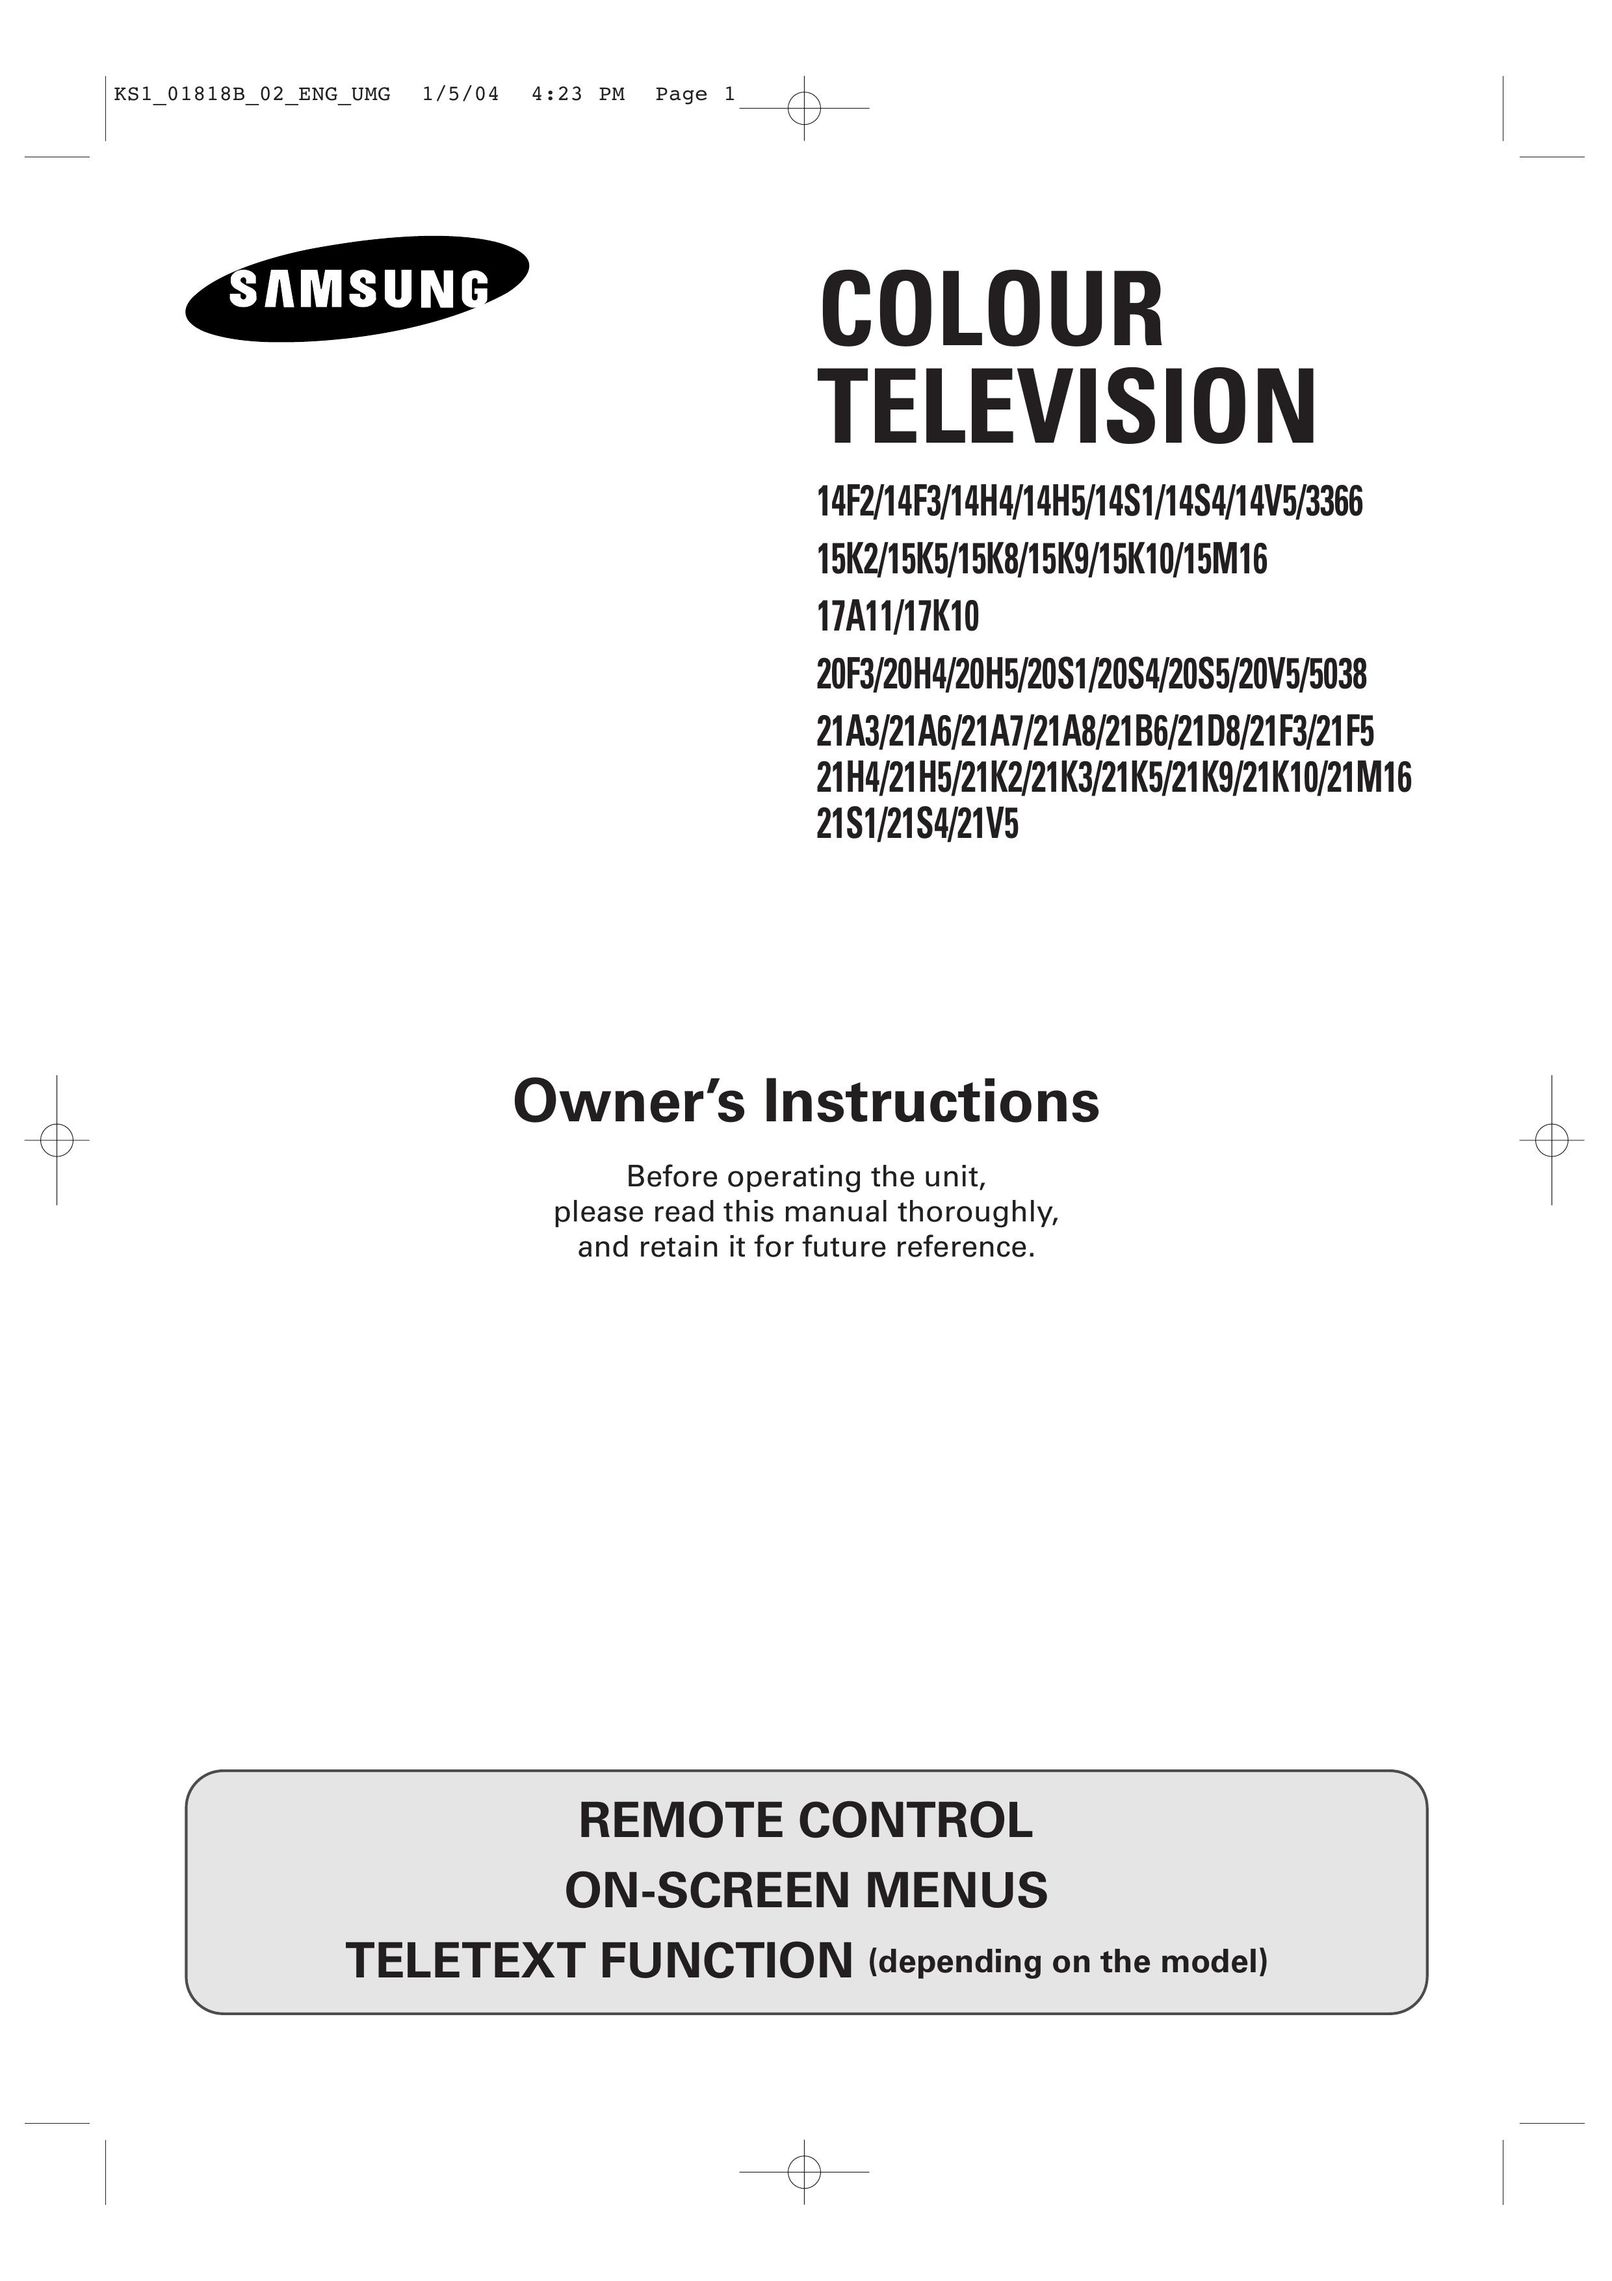 Samsung 15K10 CRT Television User Manual